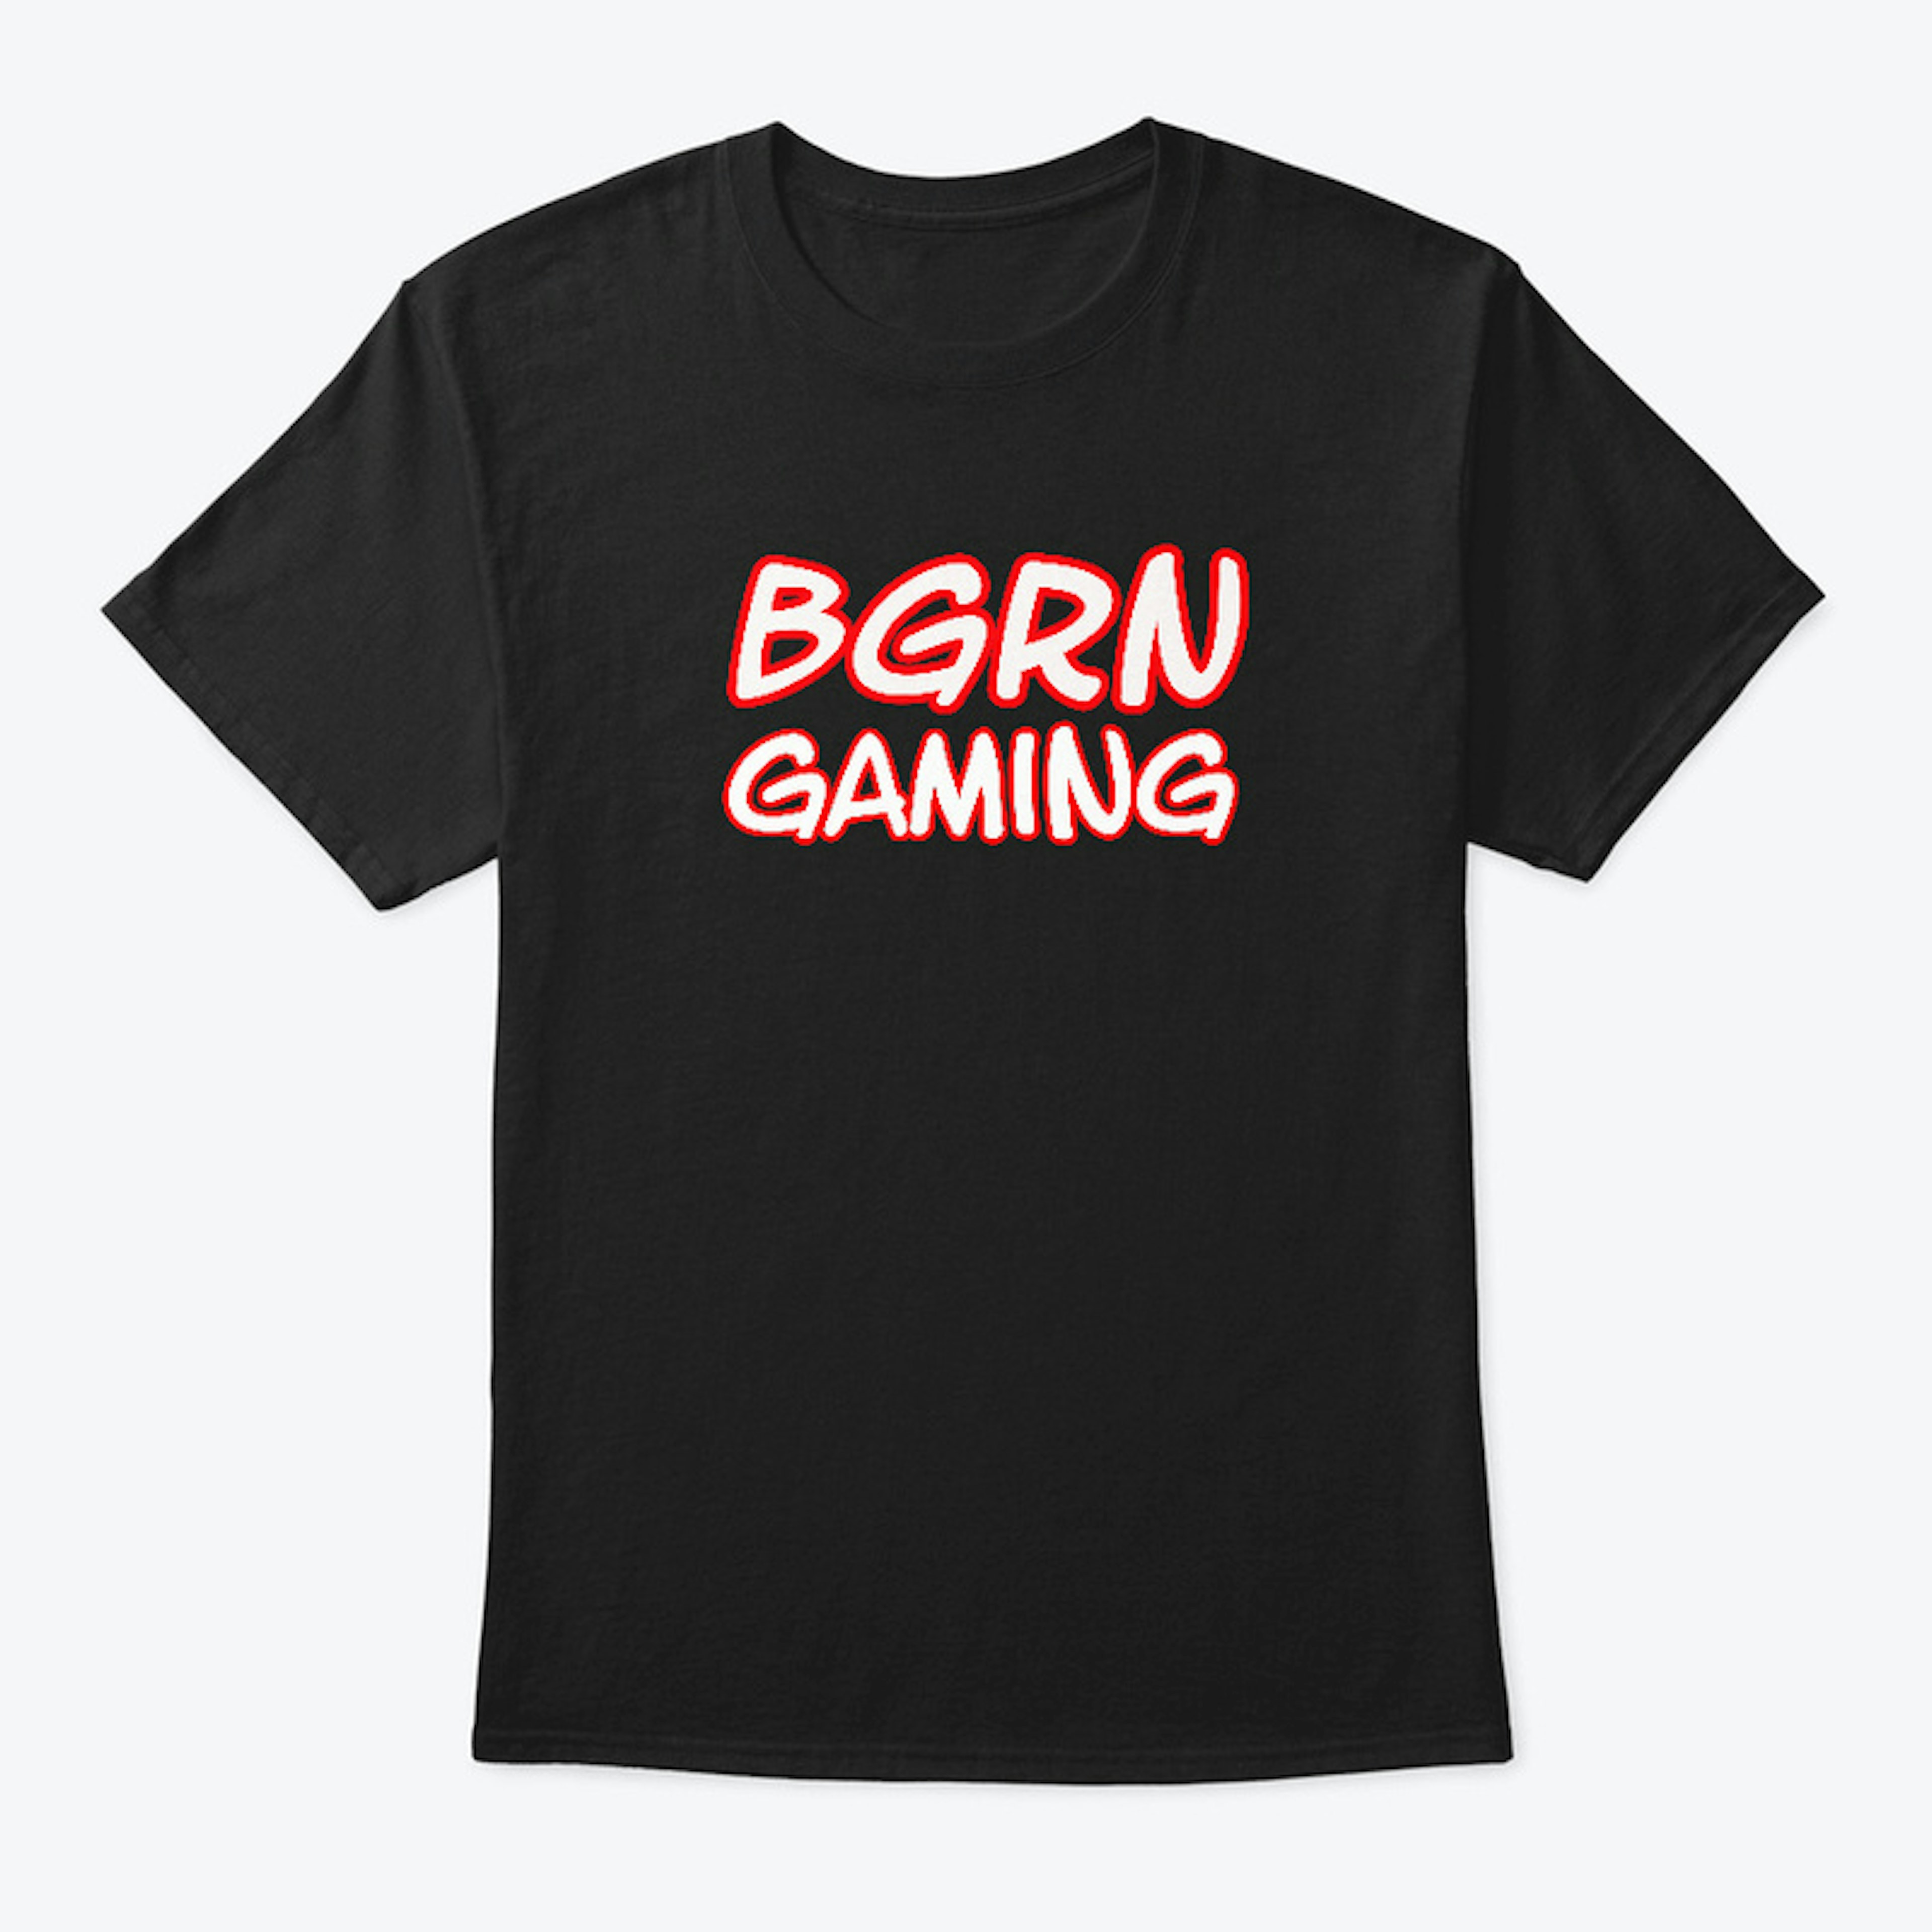 BGRN Gaming